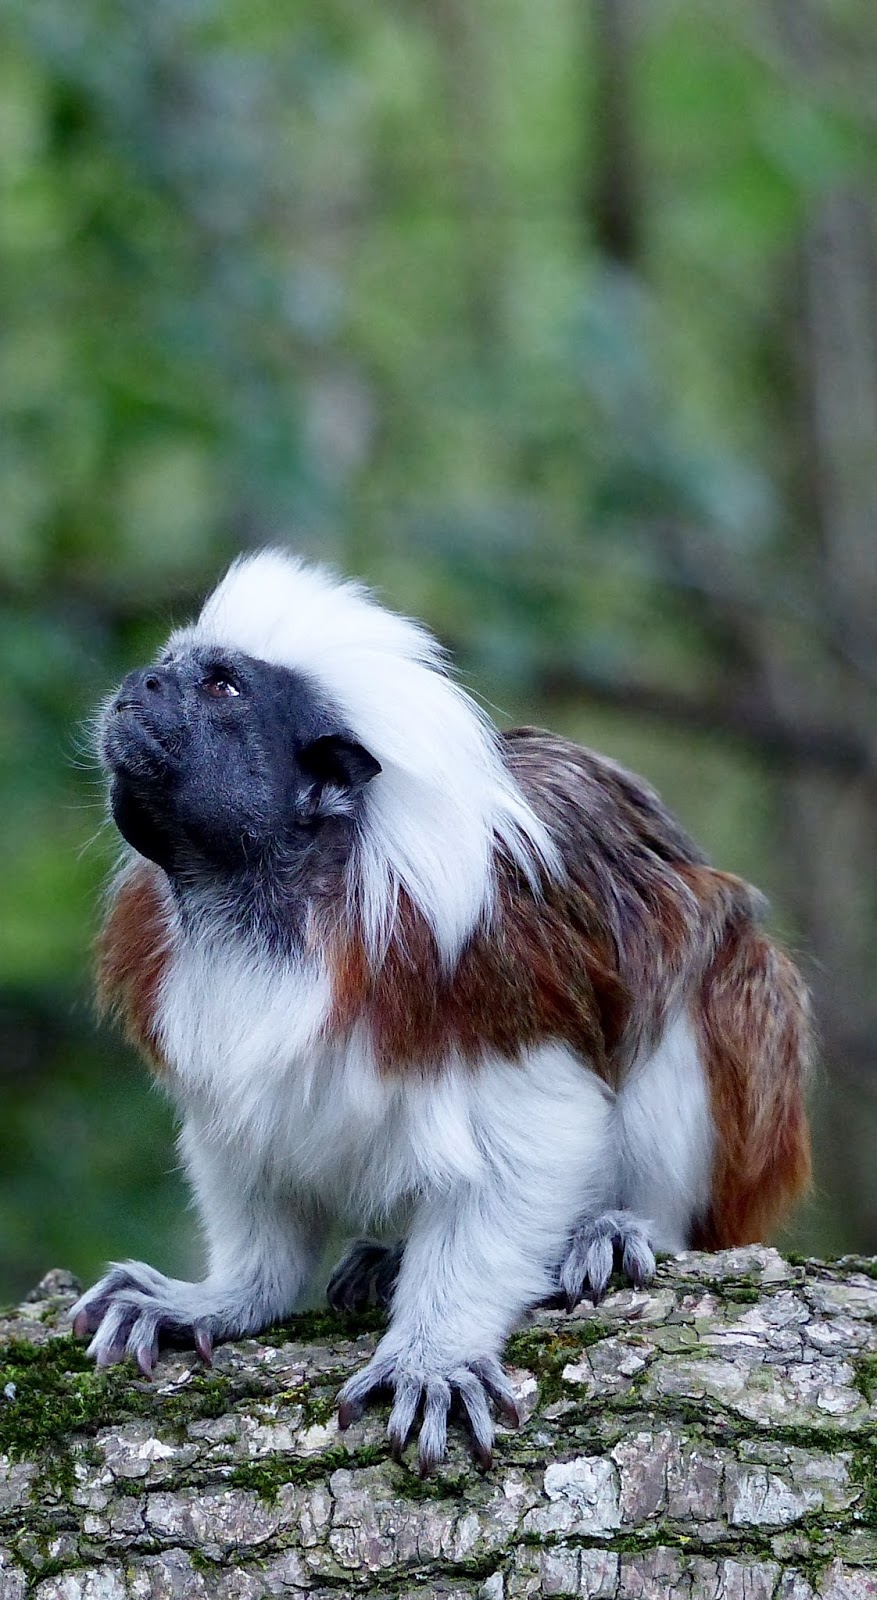 Picture of the stylish liszt monkey.